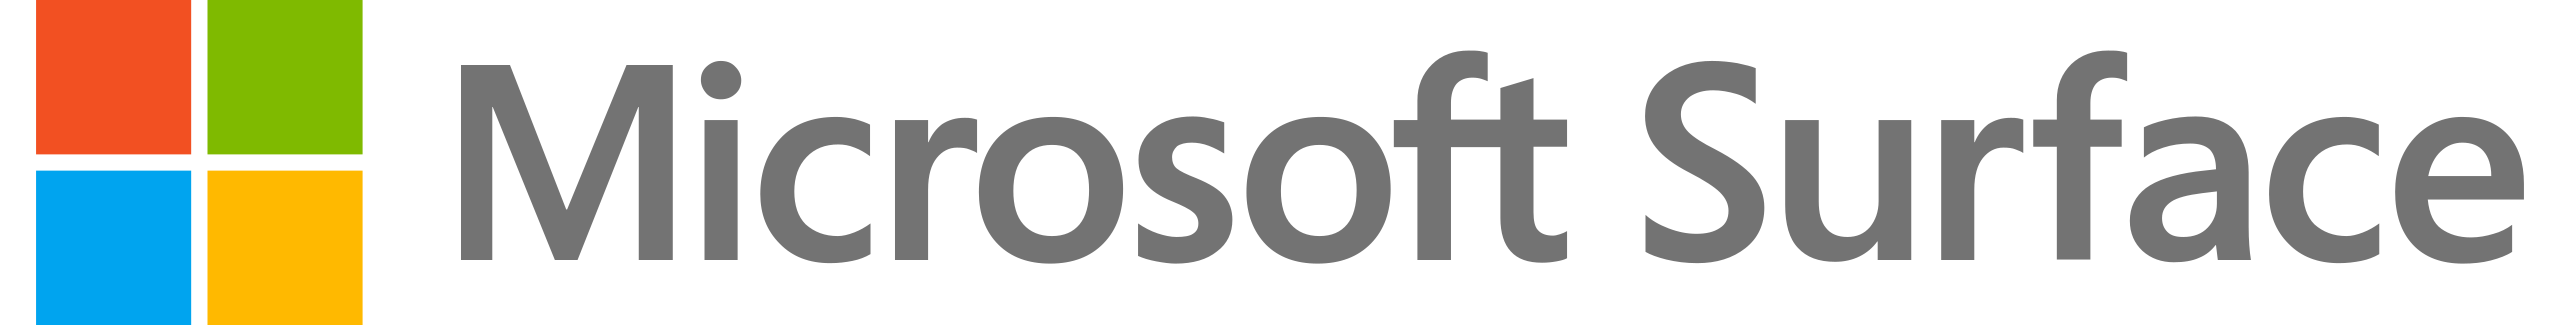 Microsoft_Surface_logo.svg.png